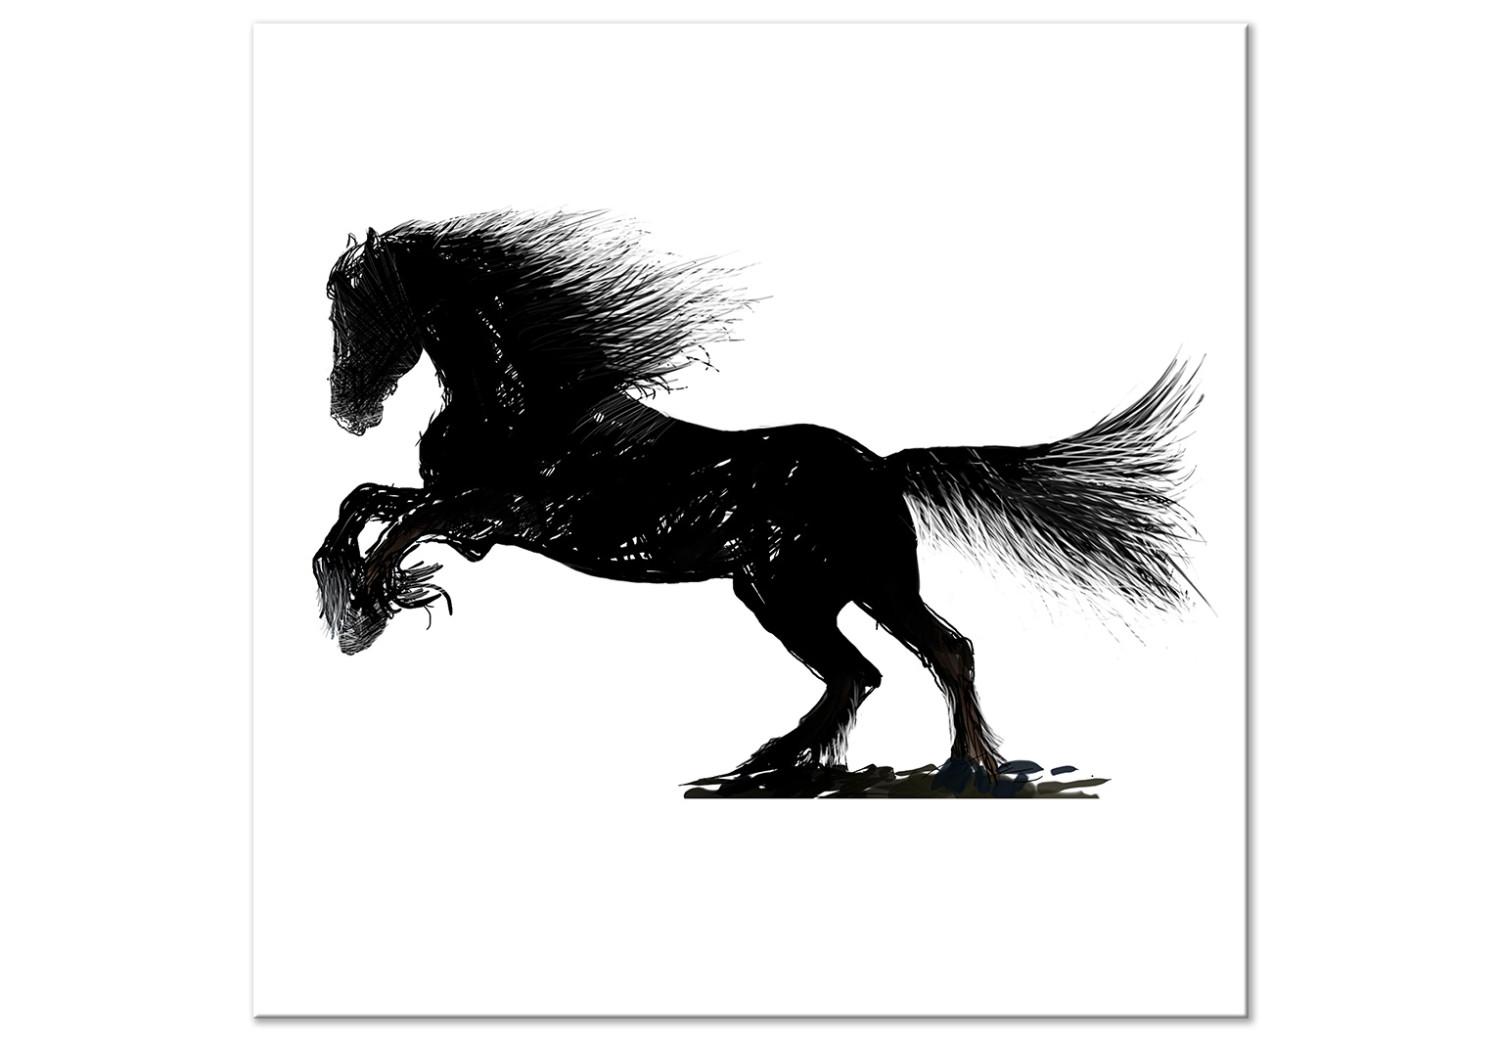 Cuadro decorativo Caballo dinámico - dibujos animados de la silueta de caballo